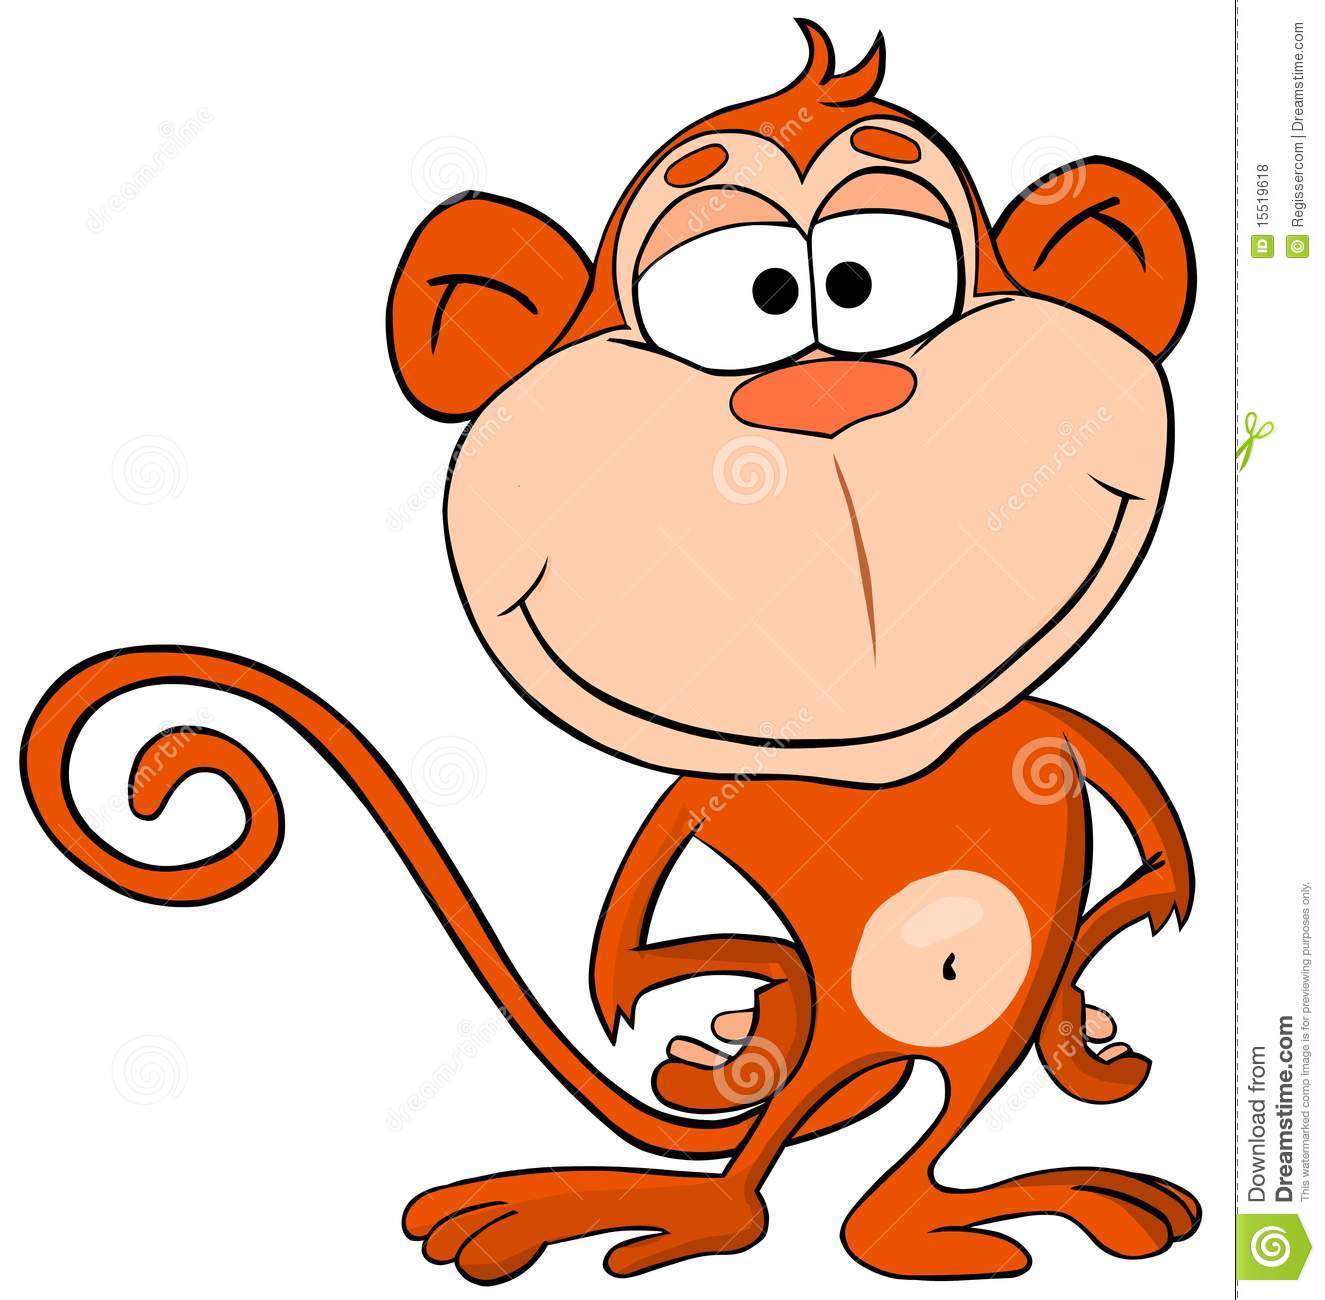 Cartoon Monkey Pictures High Definition Widescreen Wallpaper